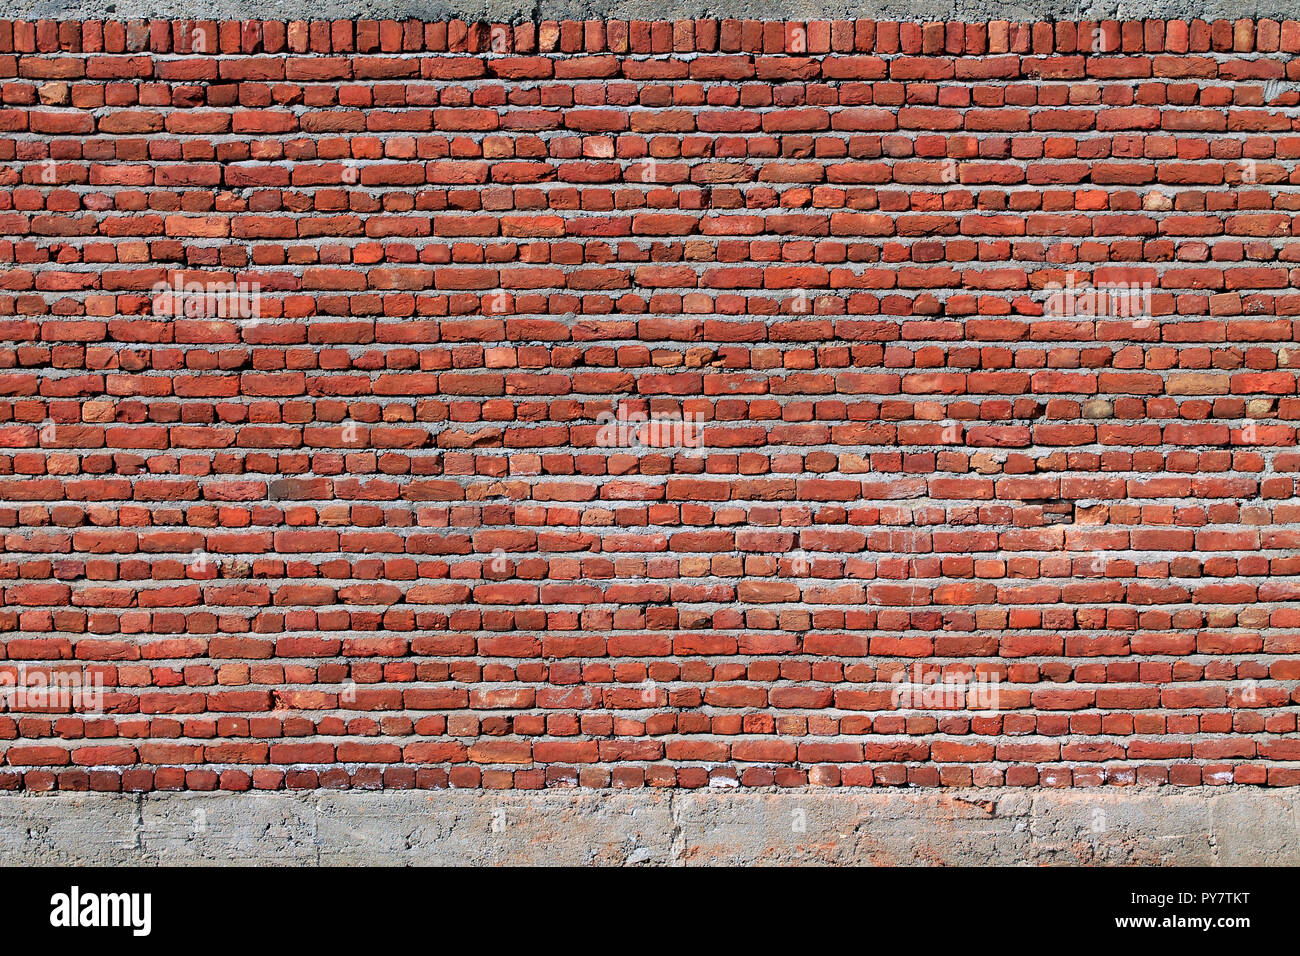 Red Brick Wall Concrete Blocks Wall Texture Stock Photo